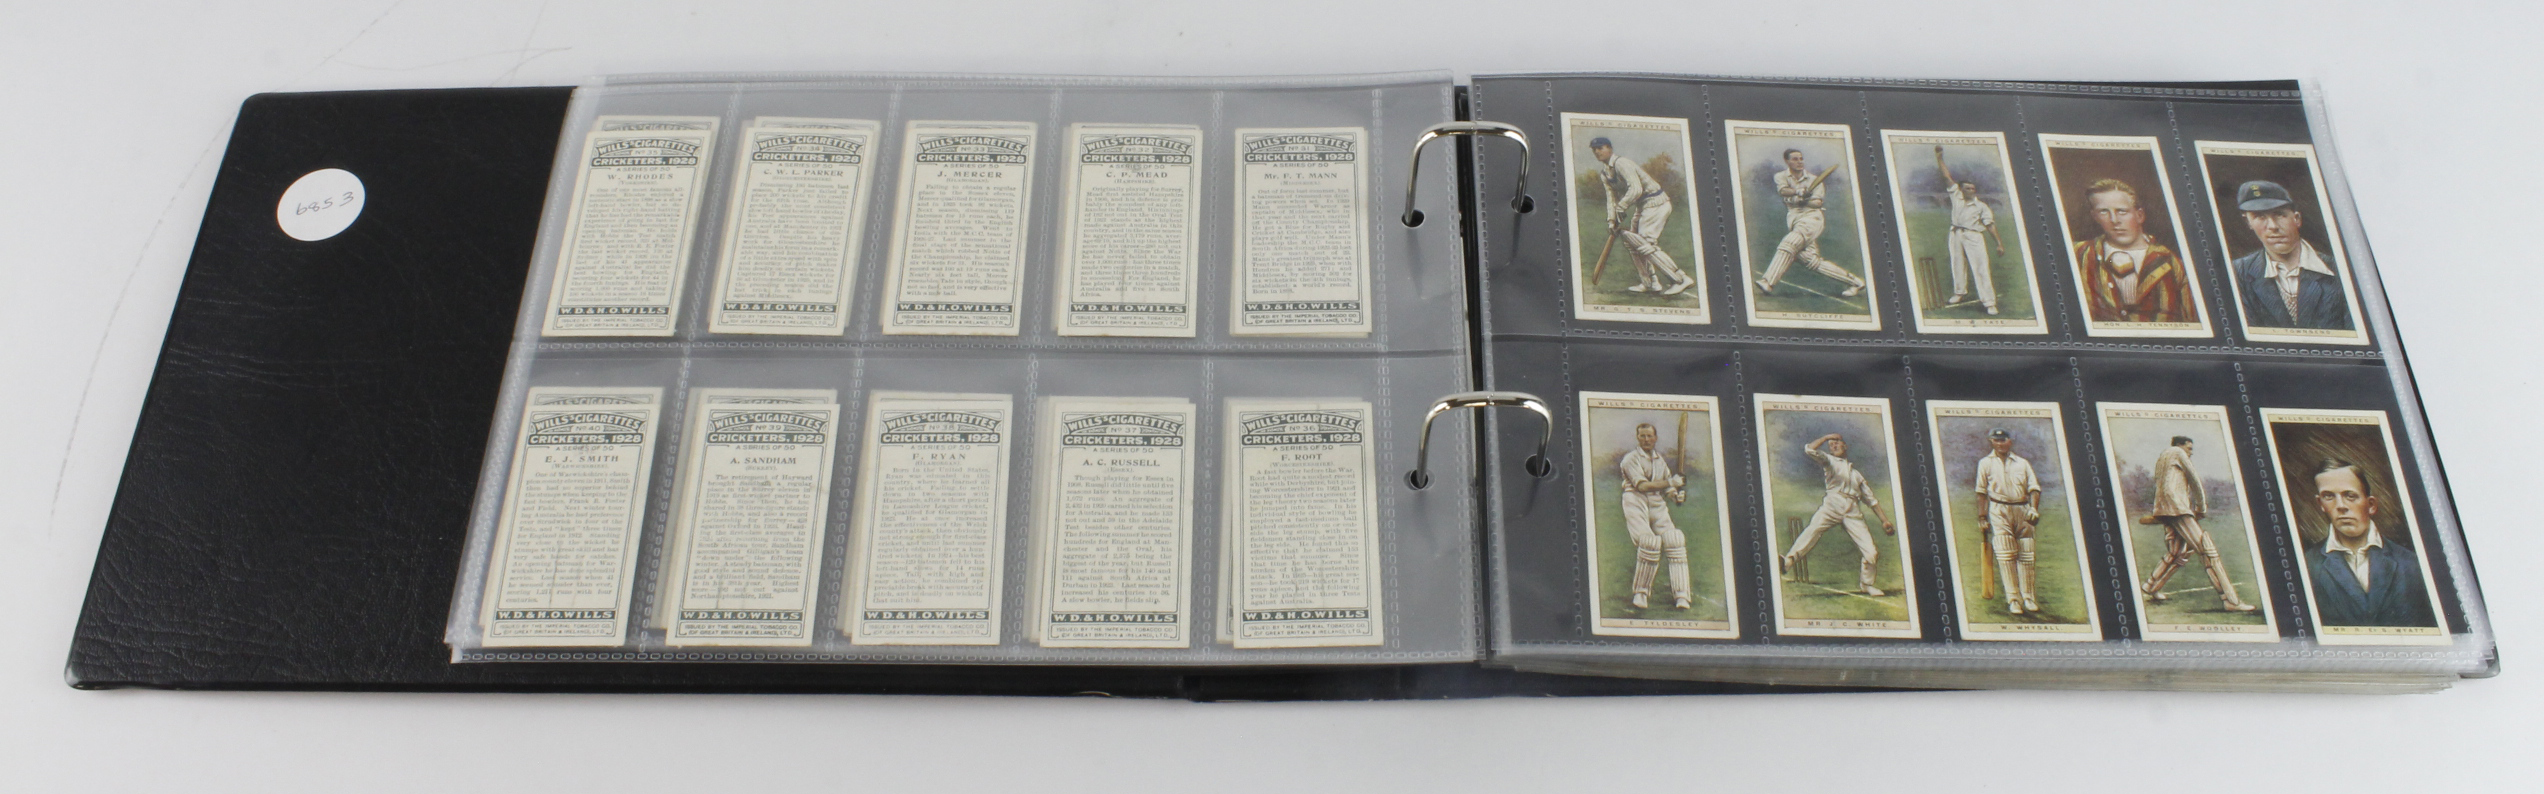 Cricket - modern album containing 5 complete sets, Ogden - Cricket 1926, Will's - Cricket 1928 & 2nd